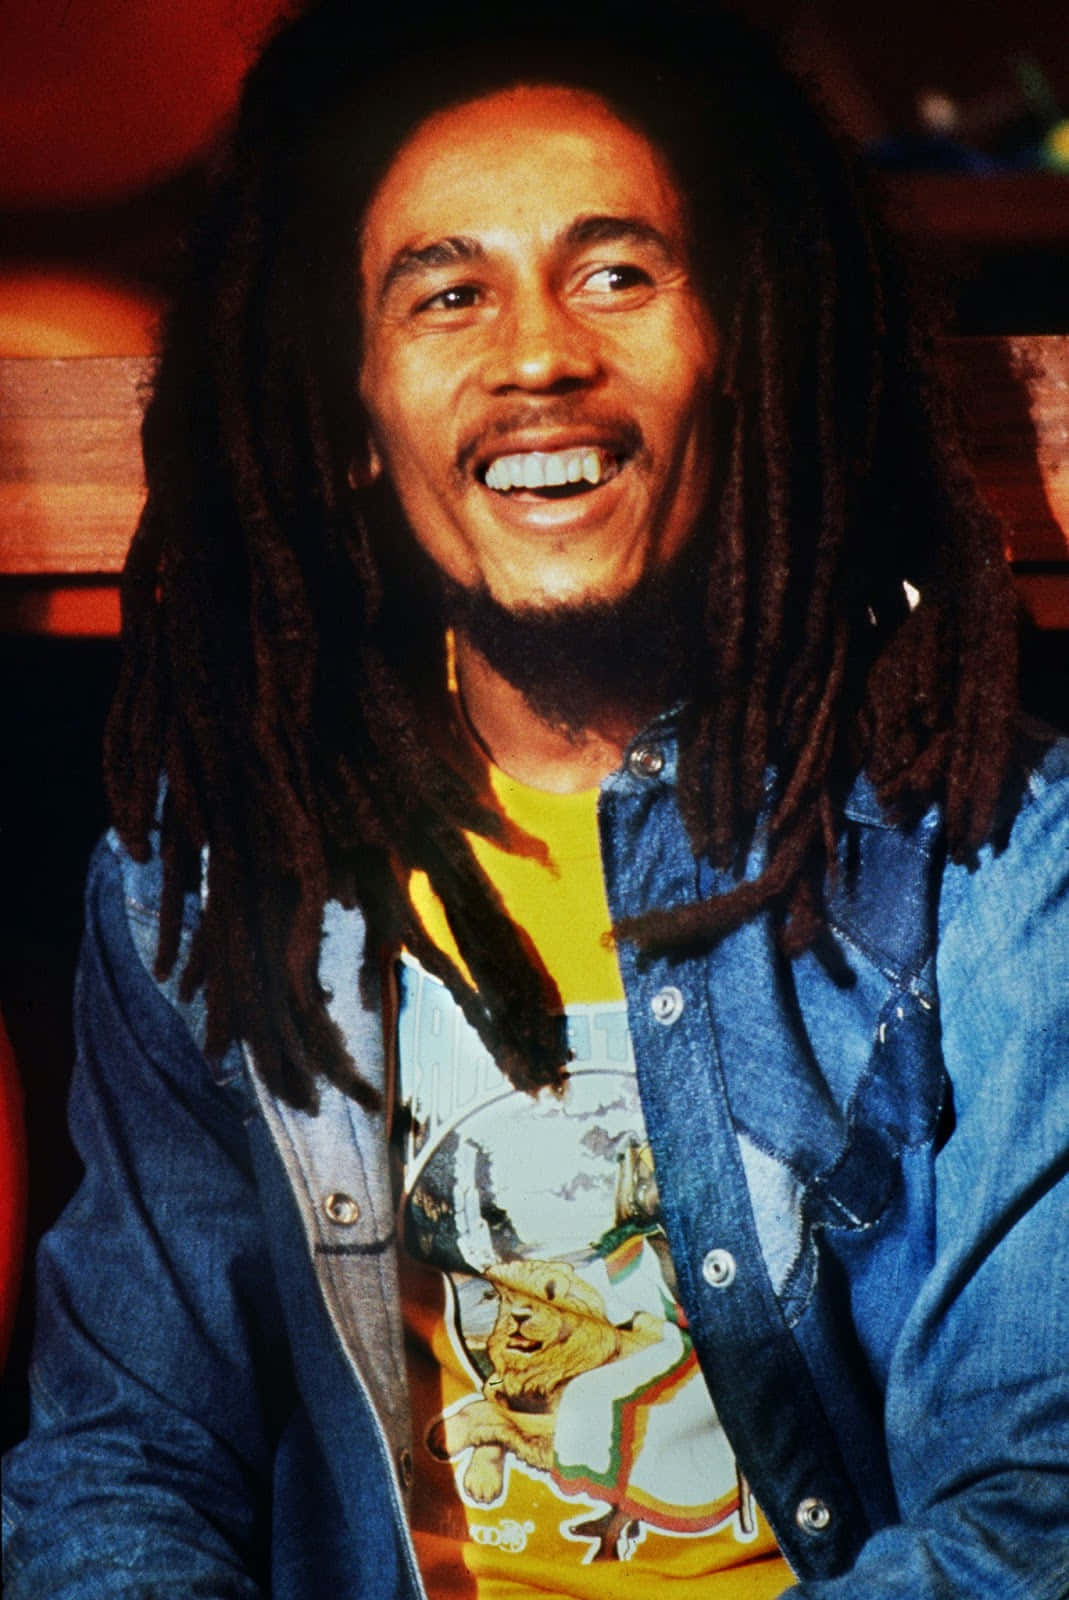 Bob Marley - A Man With Dreadlocks And A T - Shirt